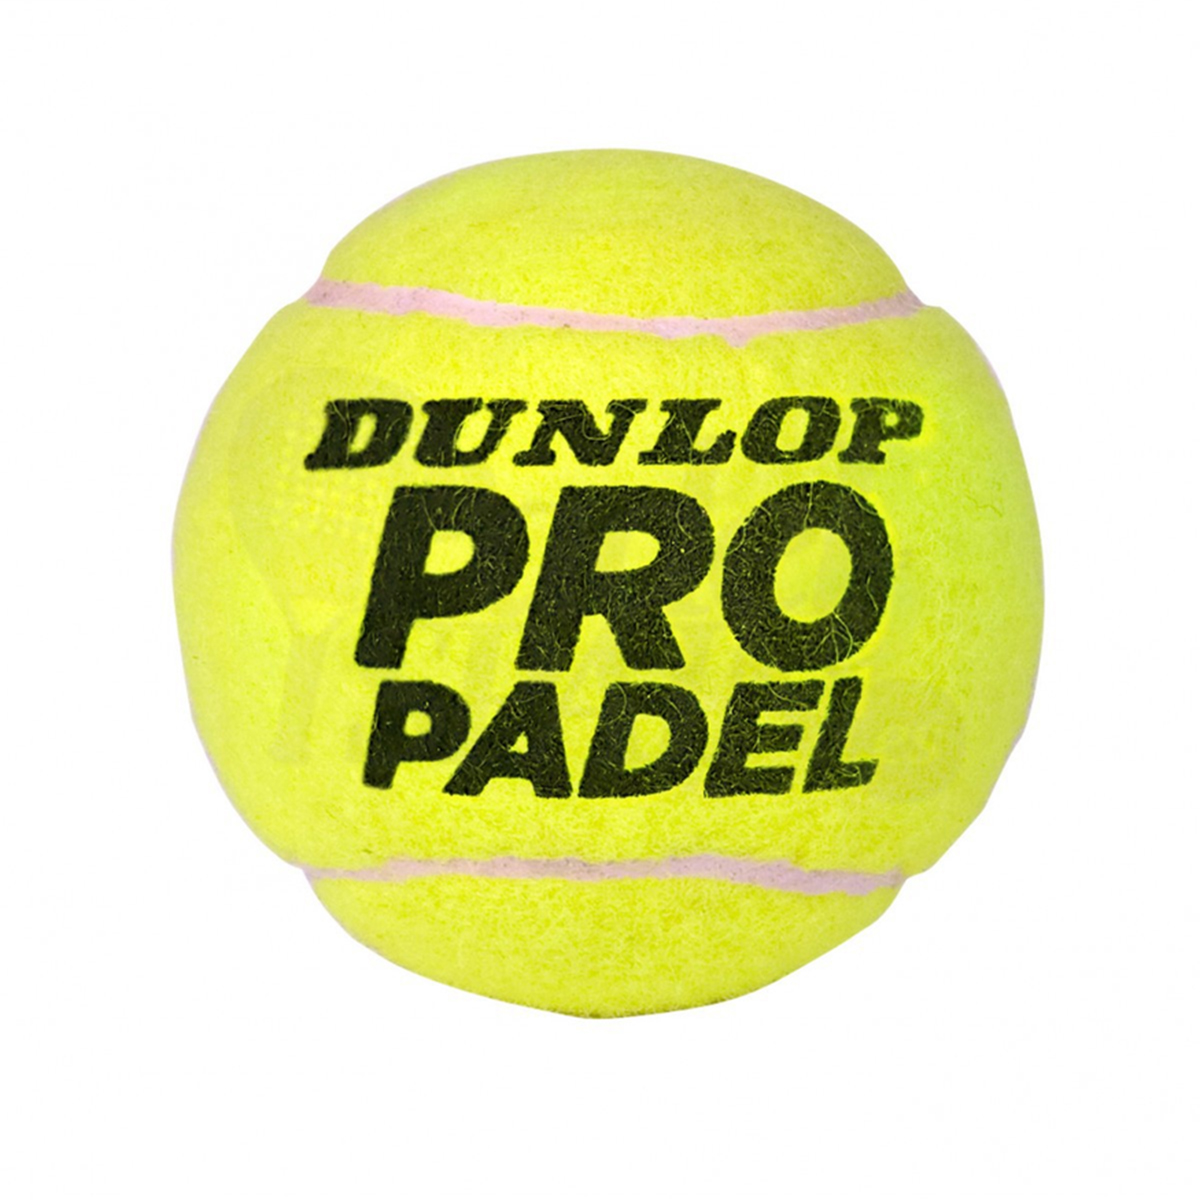 Pelota Dunlop Pro X3,  image number null